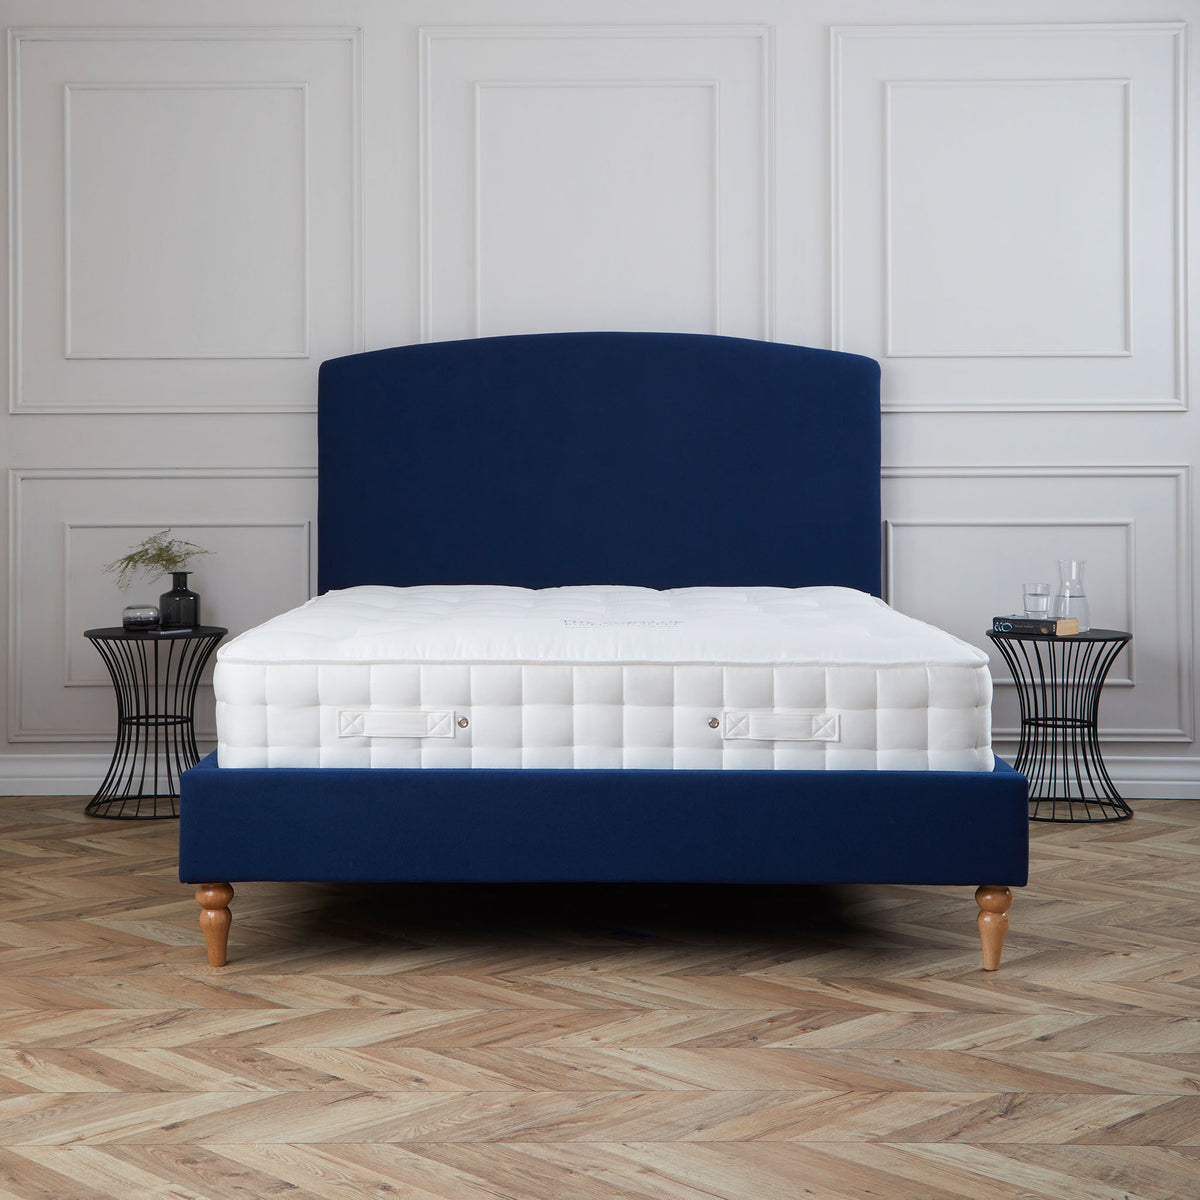 Luxury Premium Portloe Mattress from Roseland Sleep lifestyle image